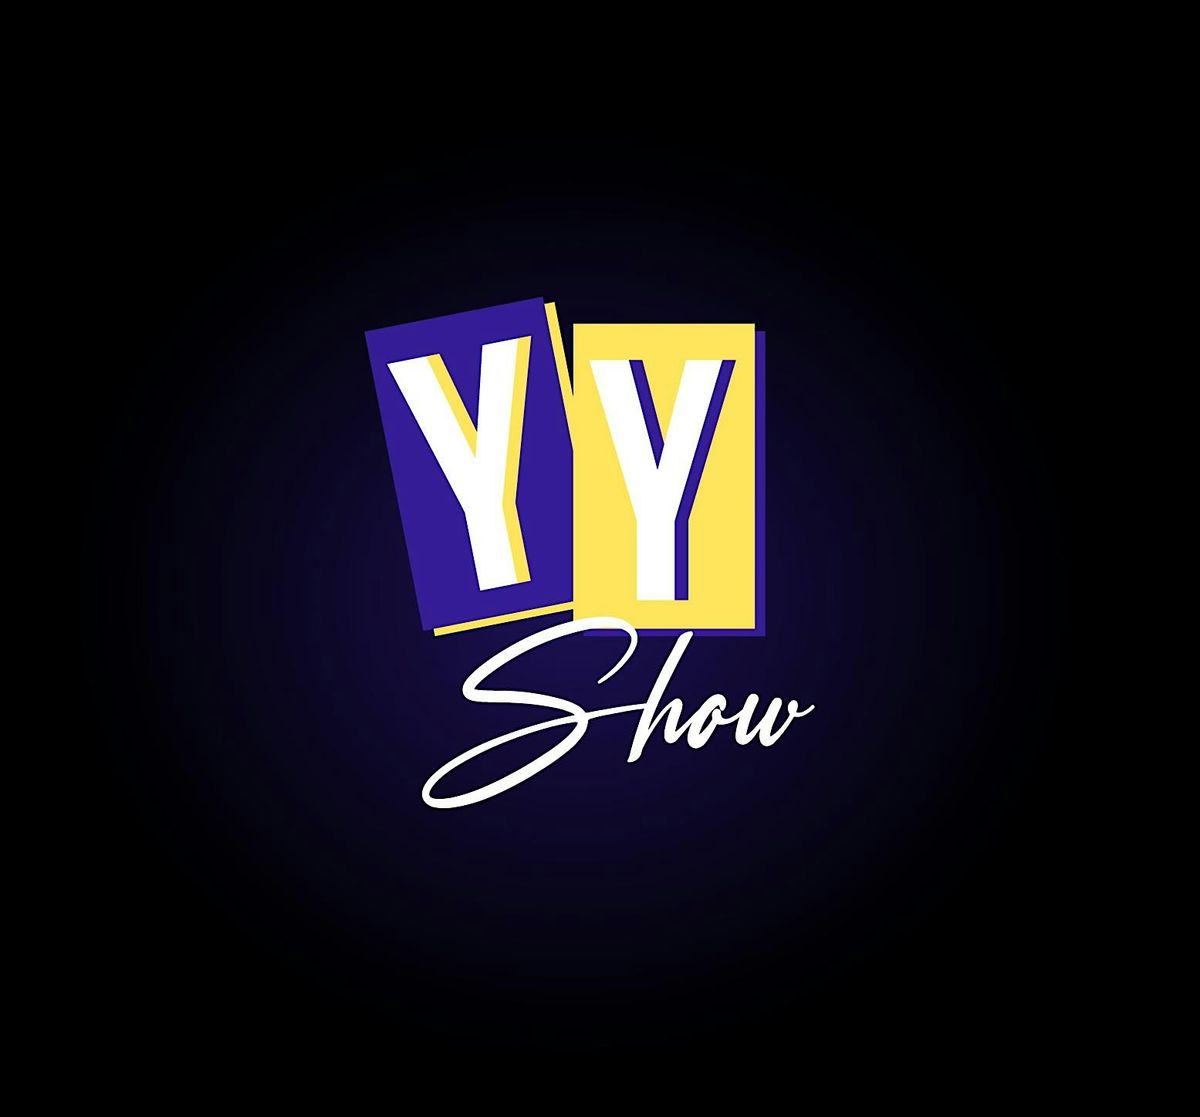 YY Show #4